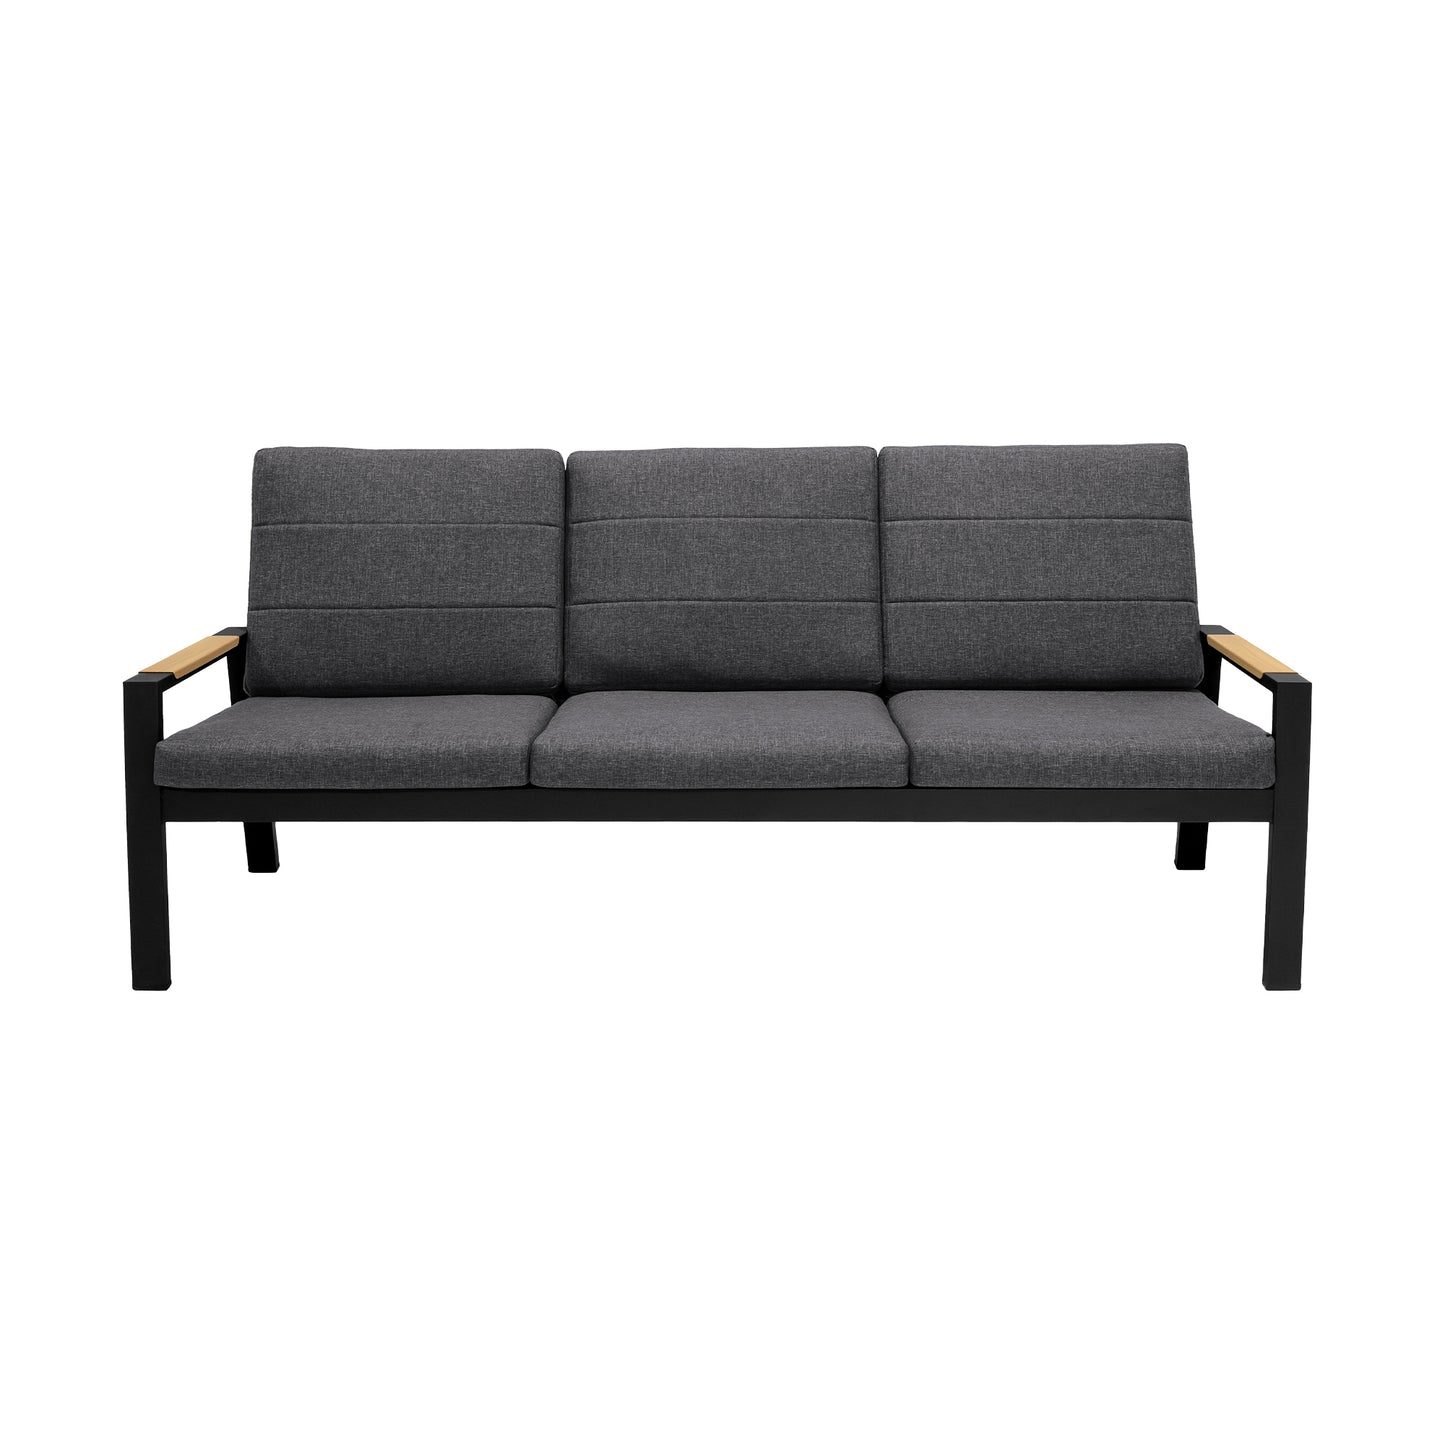 Panama Outdoor 4 Piece Black Aluminum Sofa Seating Set with Dark Gray Olefin